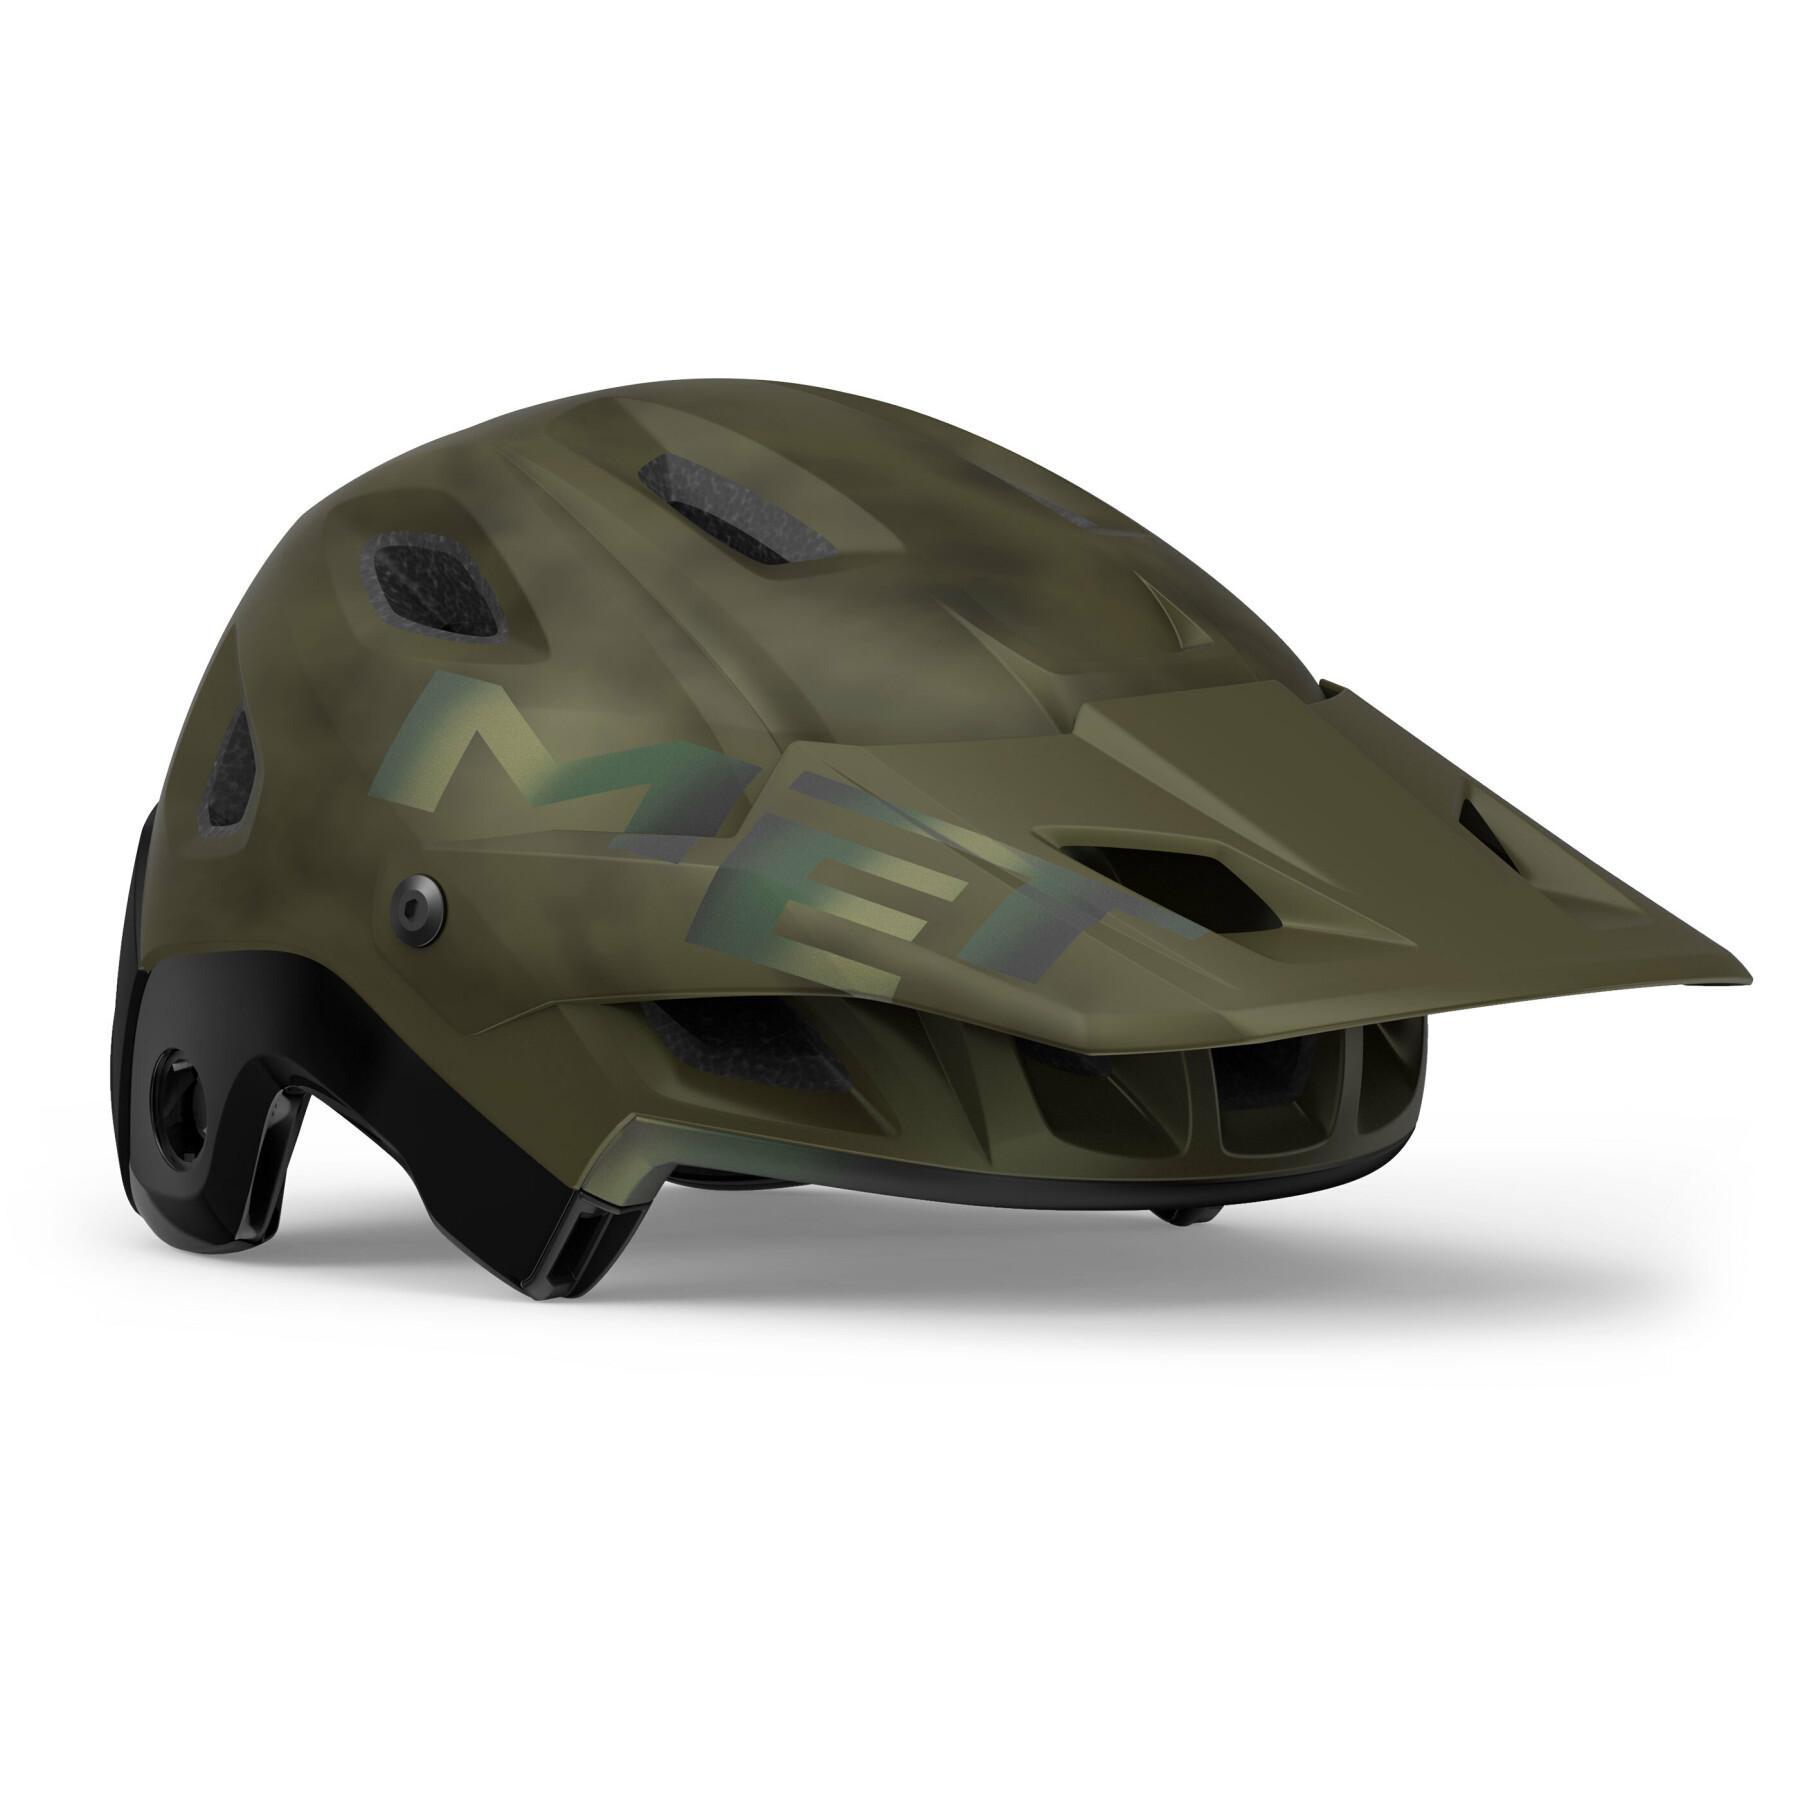 Full-face bike helmet Met Parachute Mcr Mips